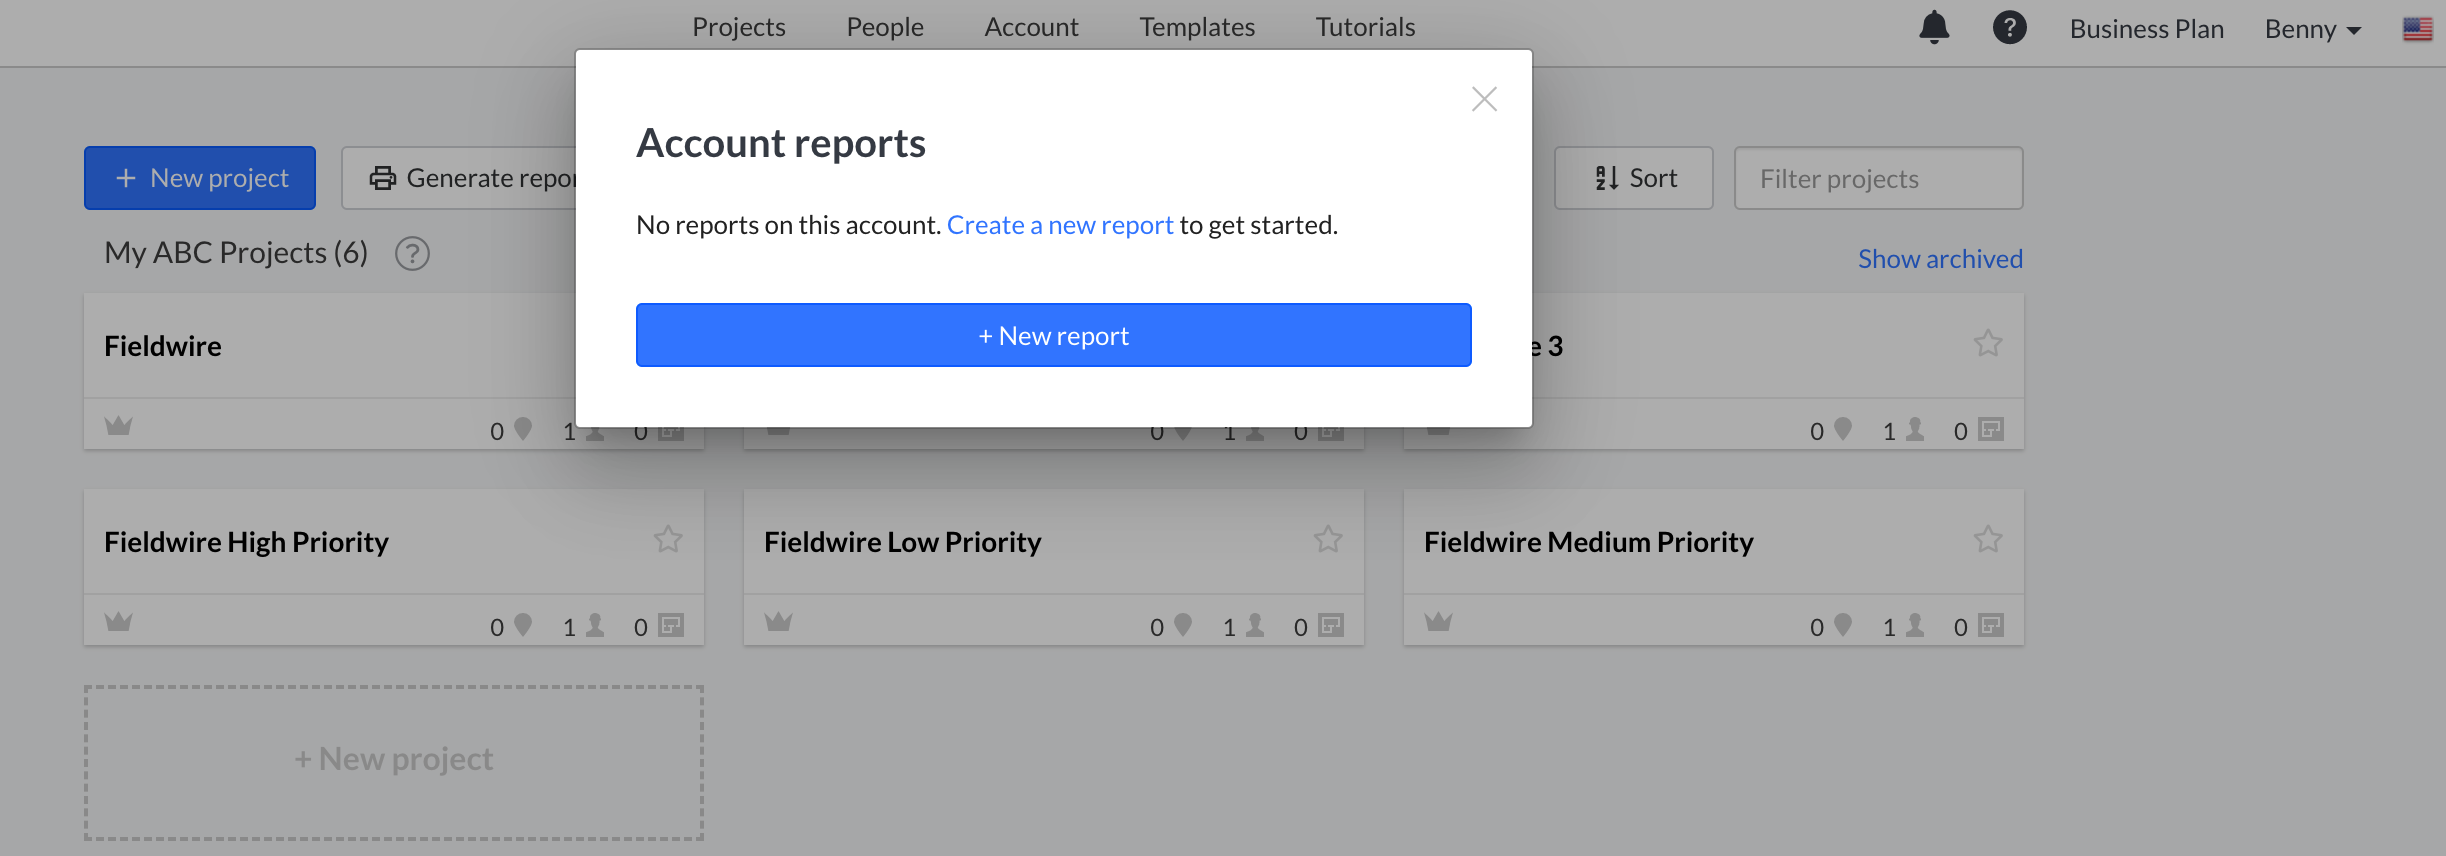 Account_reports_screenshot_2.png